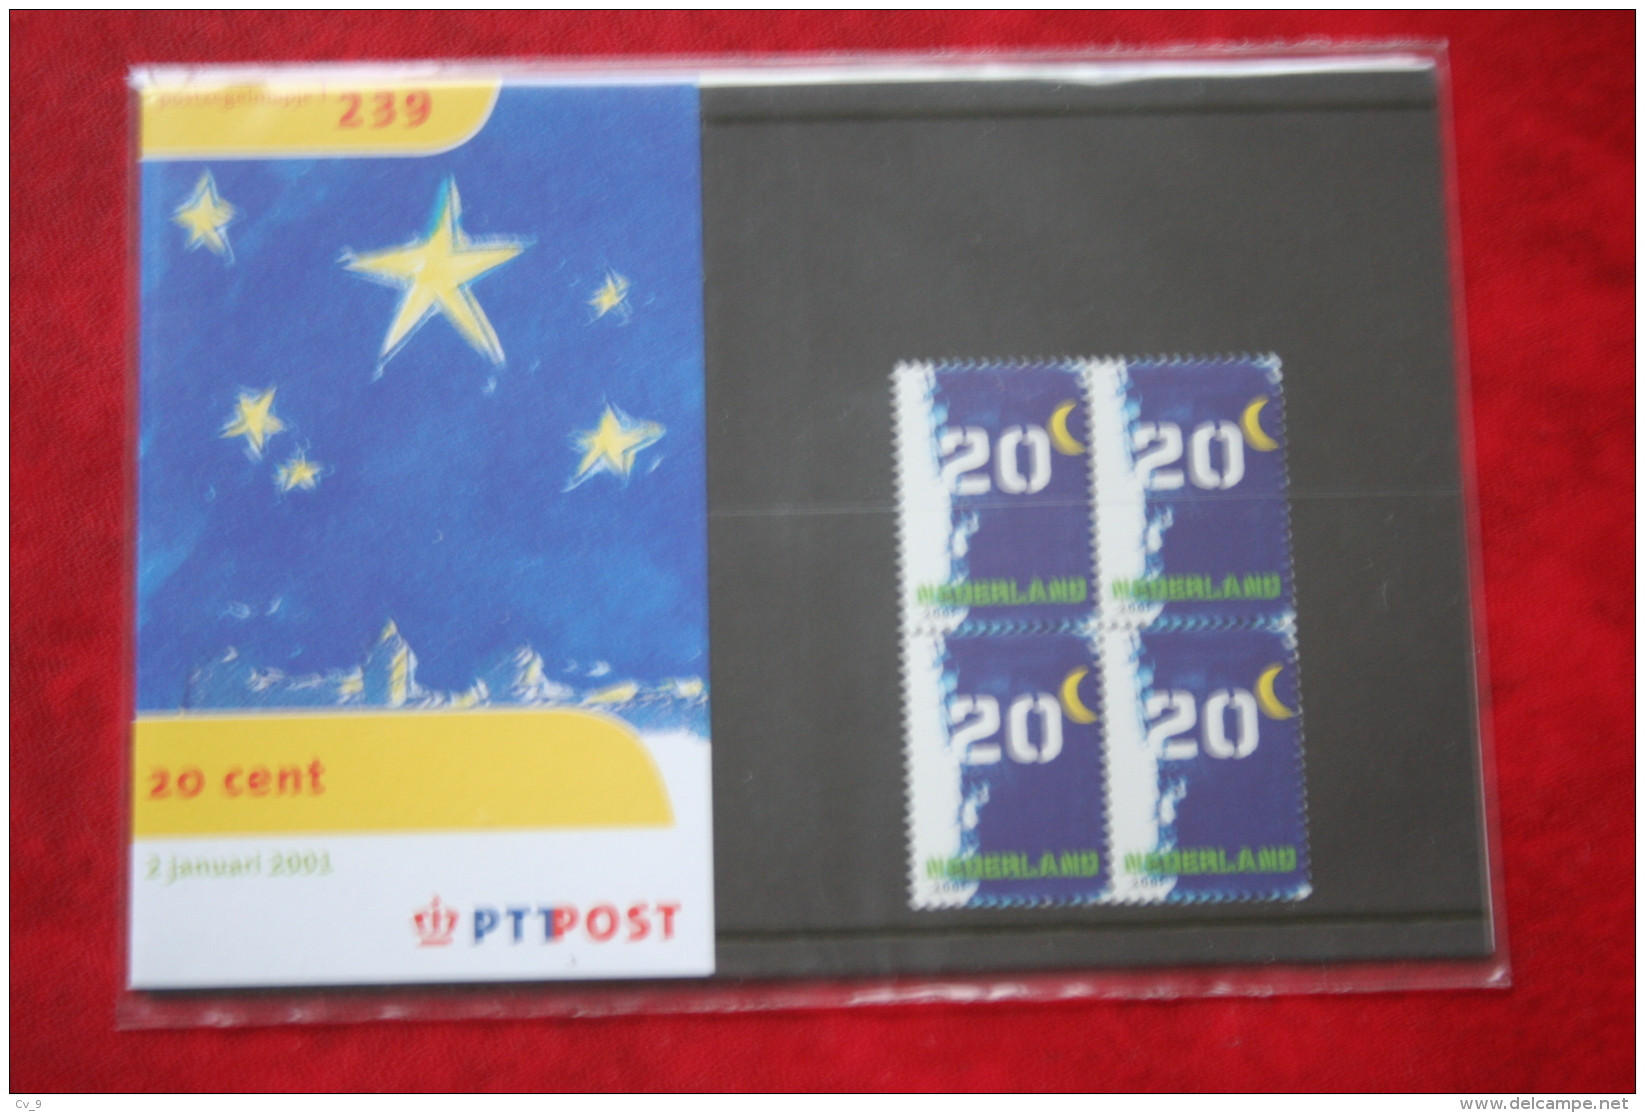 2 Januari 2001 20 Cent PZM 239 Postzegelmapje Presentation Pack POSTFRIS MNH ** NEDERLAND NIEDERLANDE NETHERLANDS - Neufs